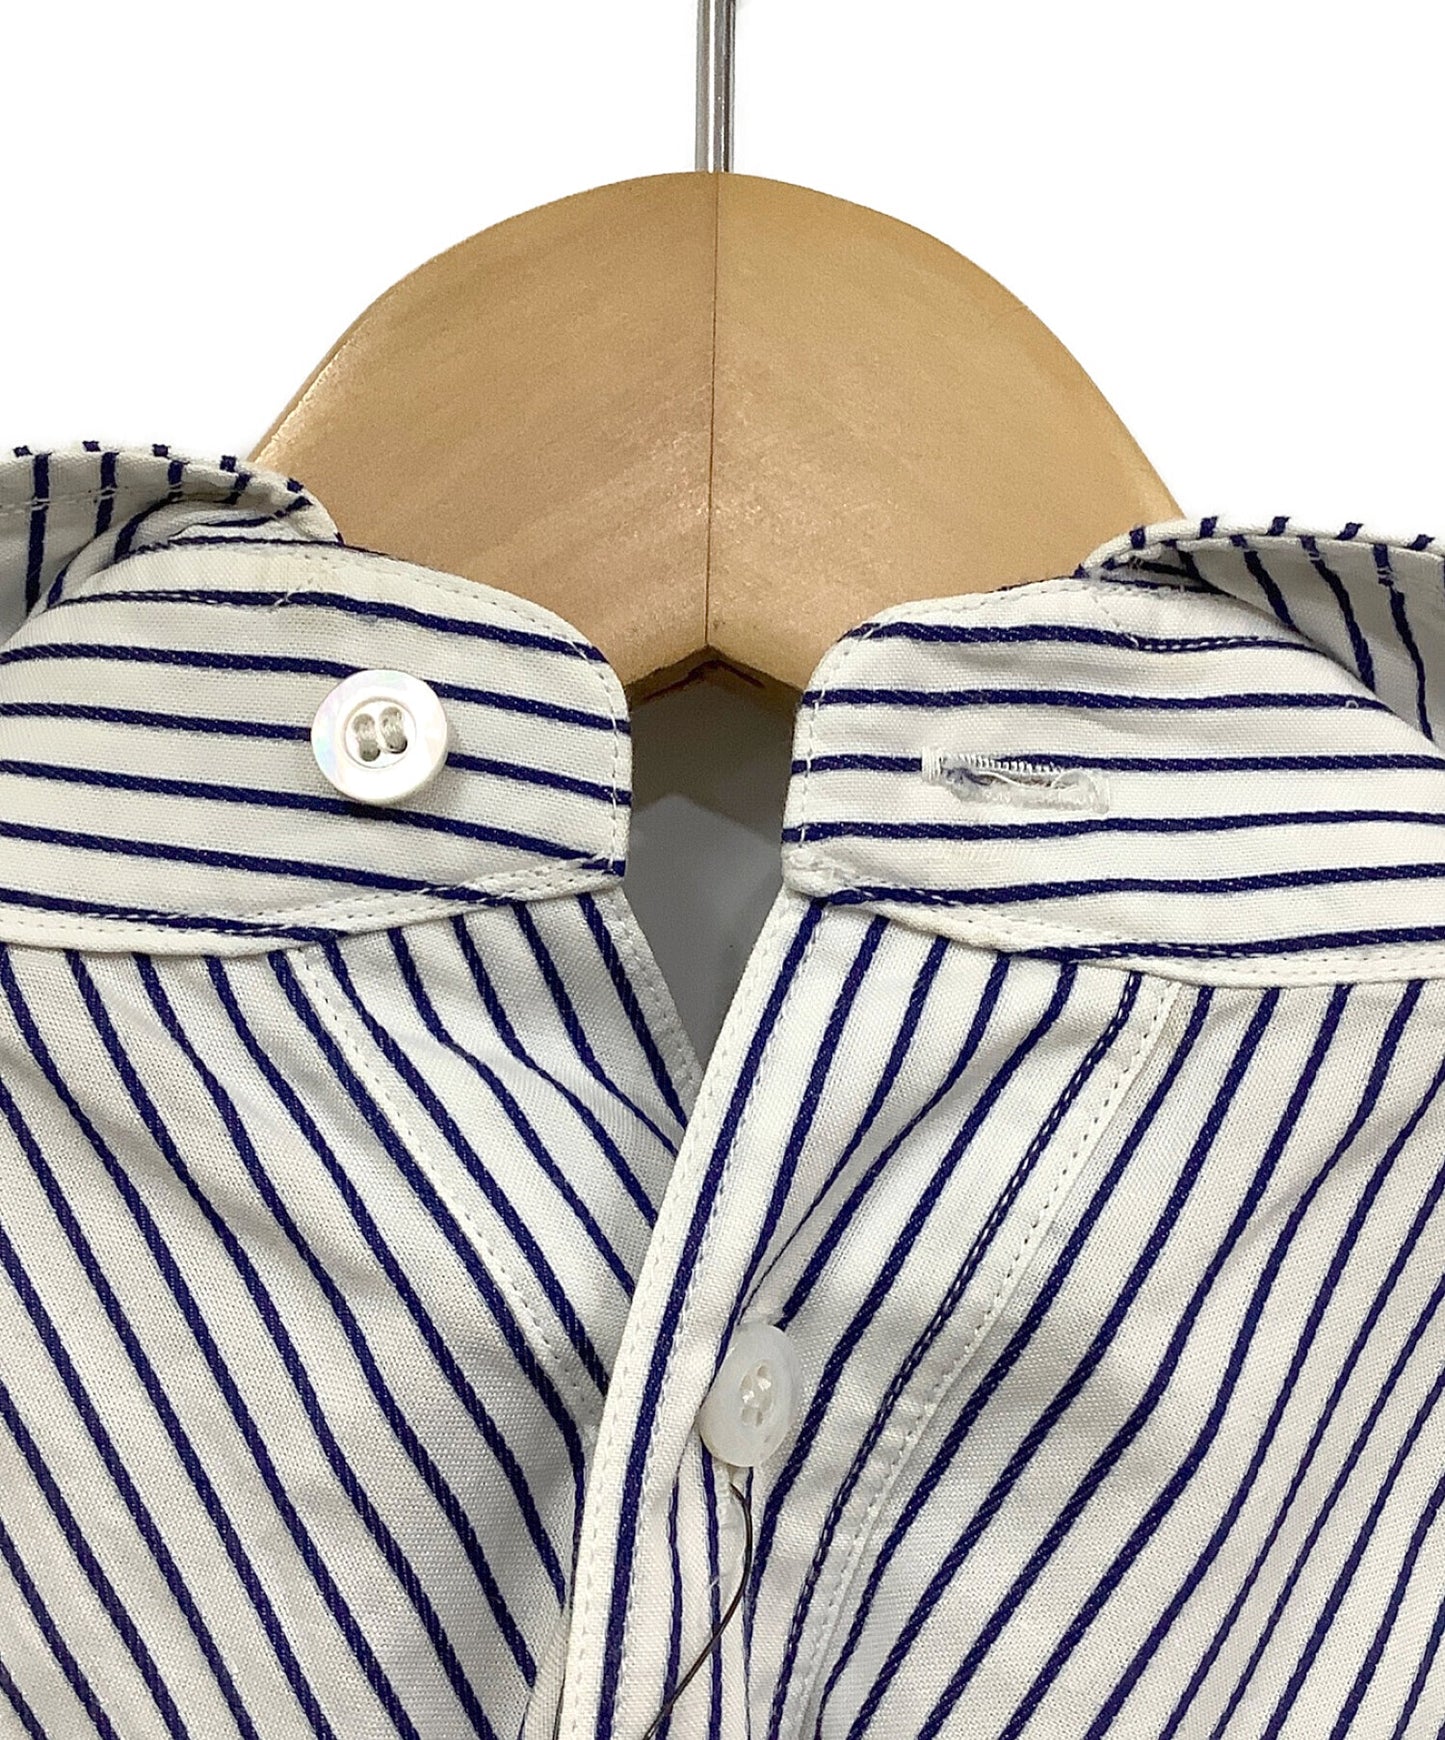 [Pre-owned] COMME des GARCONS JUNYA WATANABE MAN dress shirt WP-B043-051-1-2